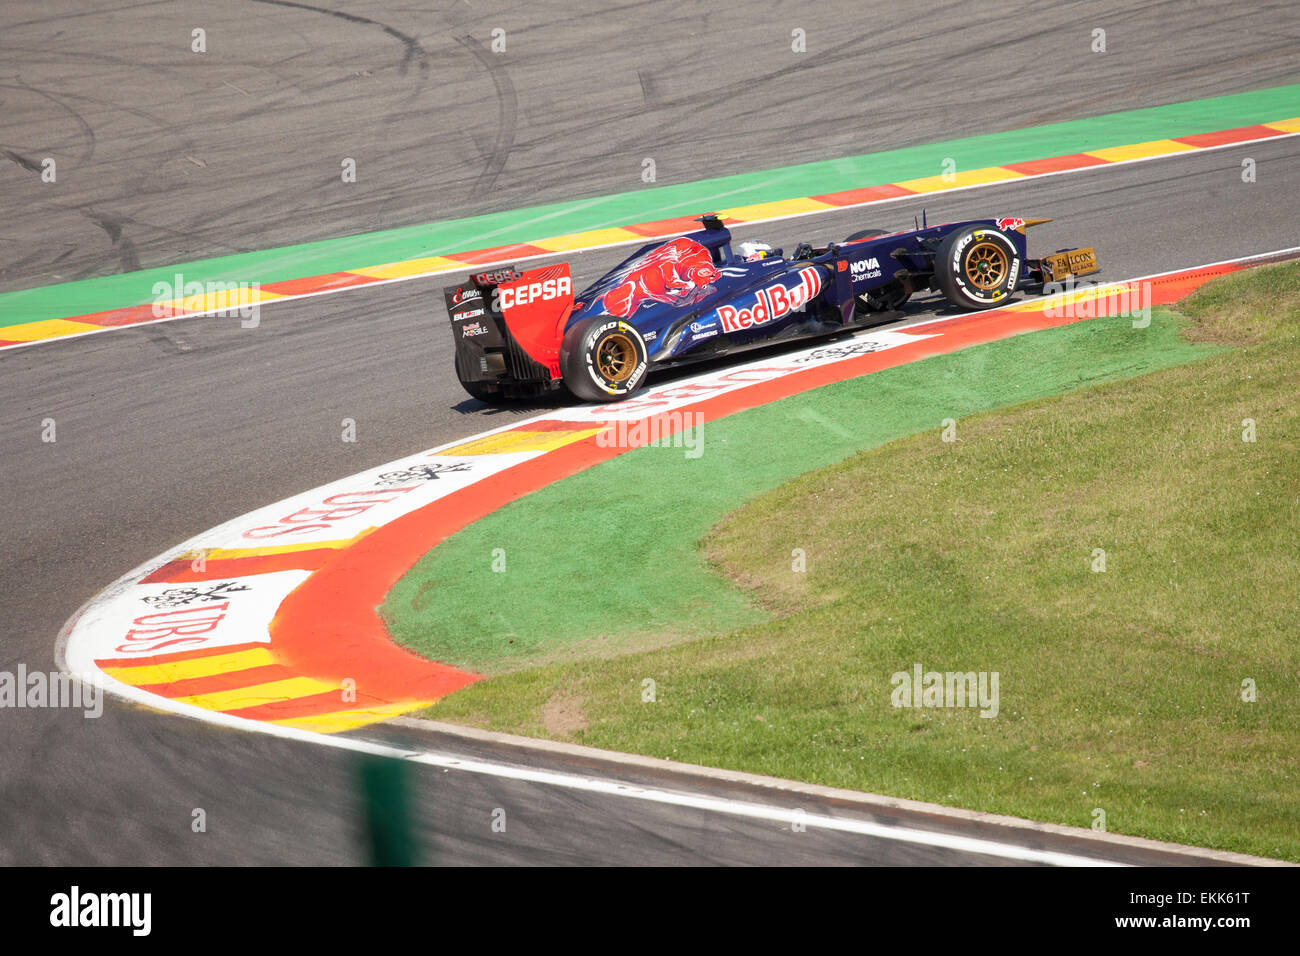 Daniel Ricciardo beim belgischen Grand Prix Spa 2013 Stockfoto